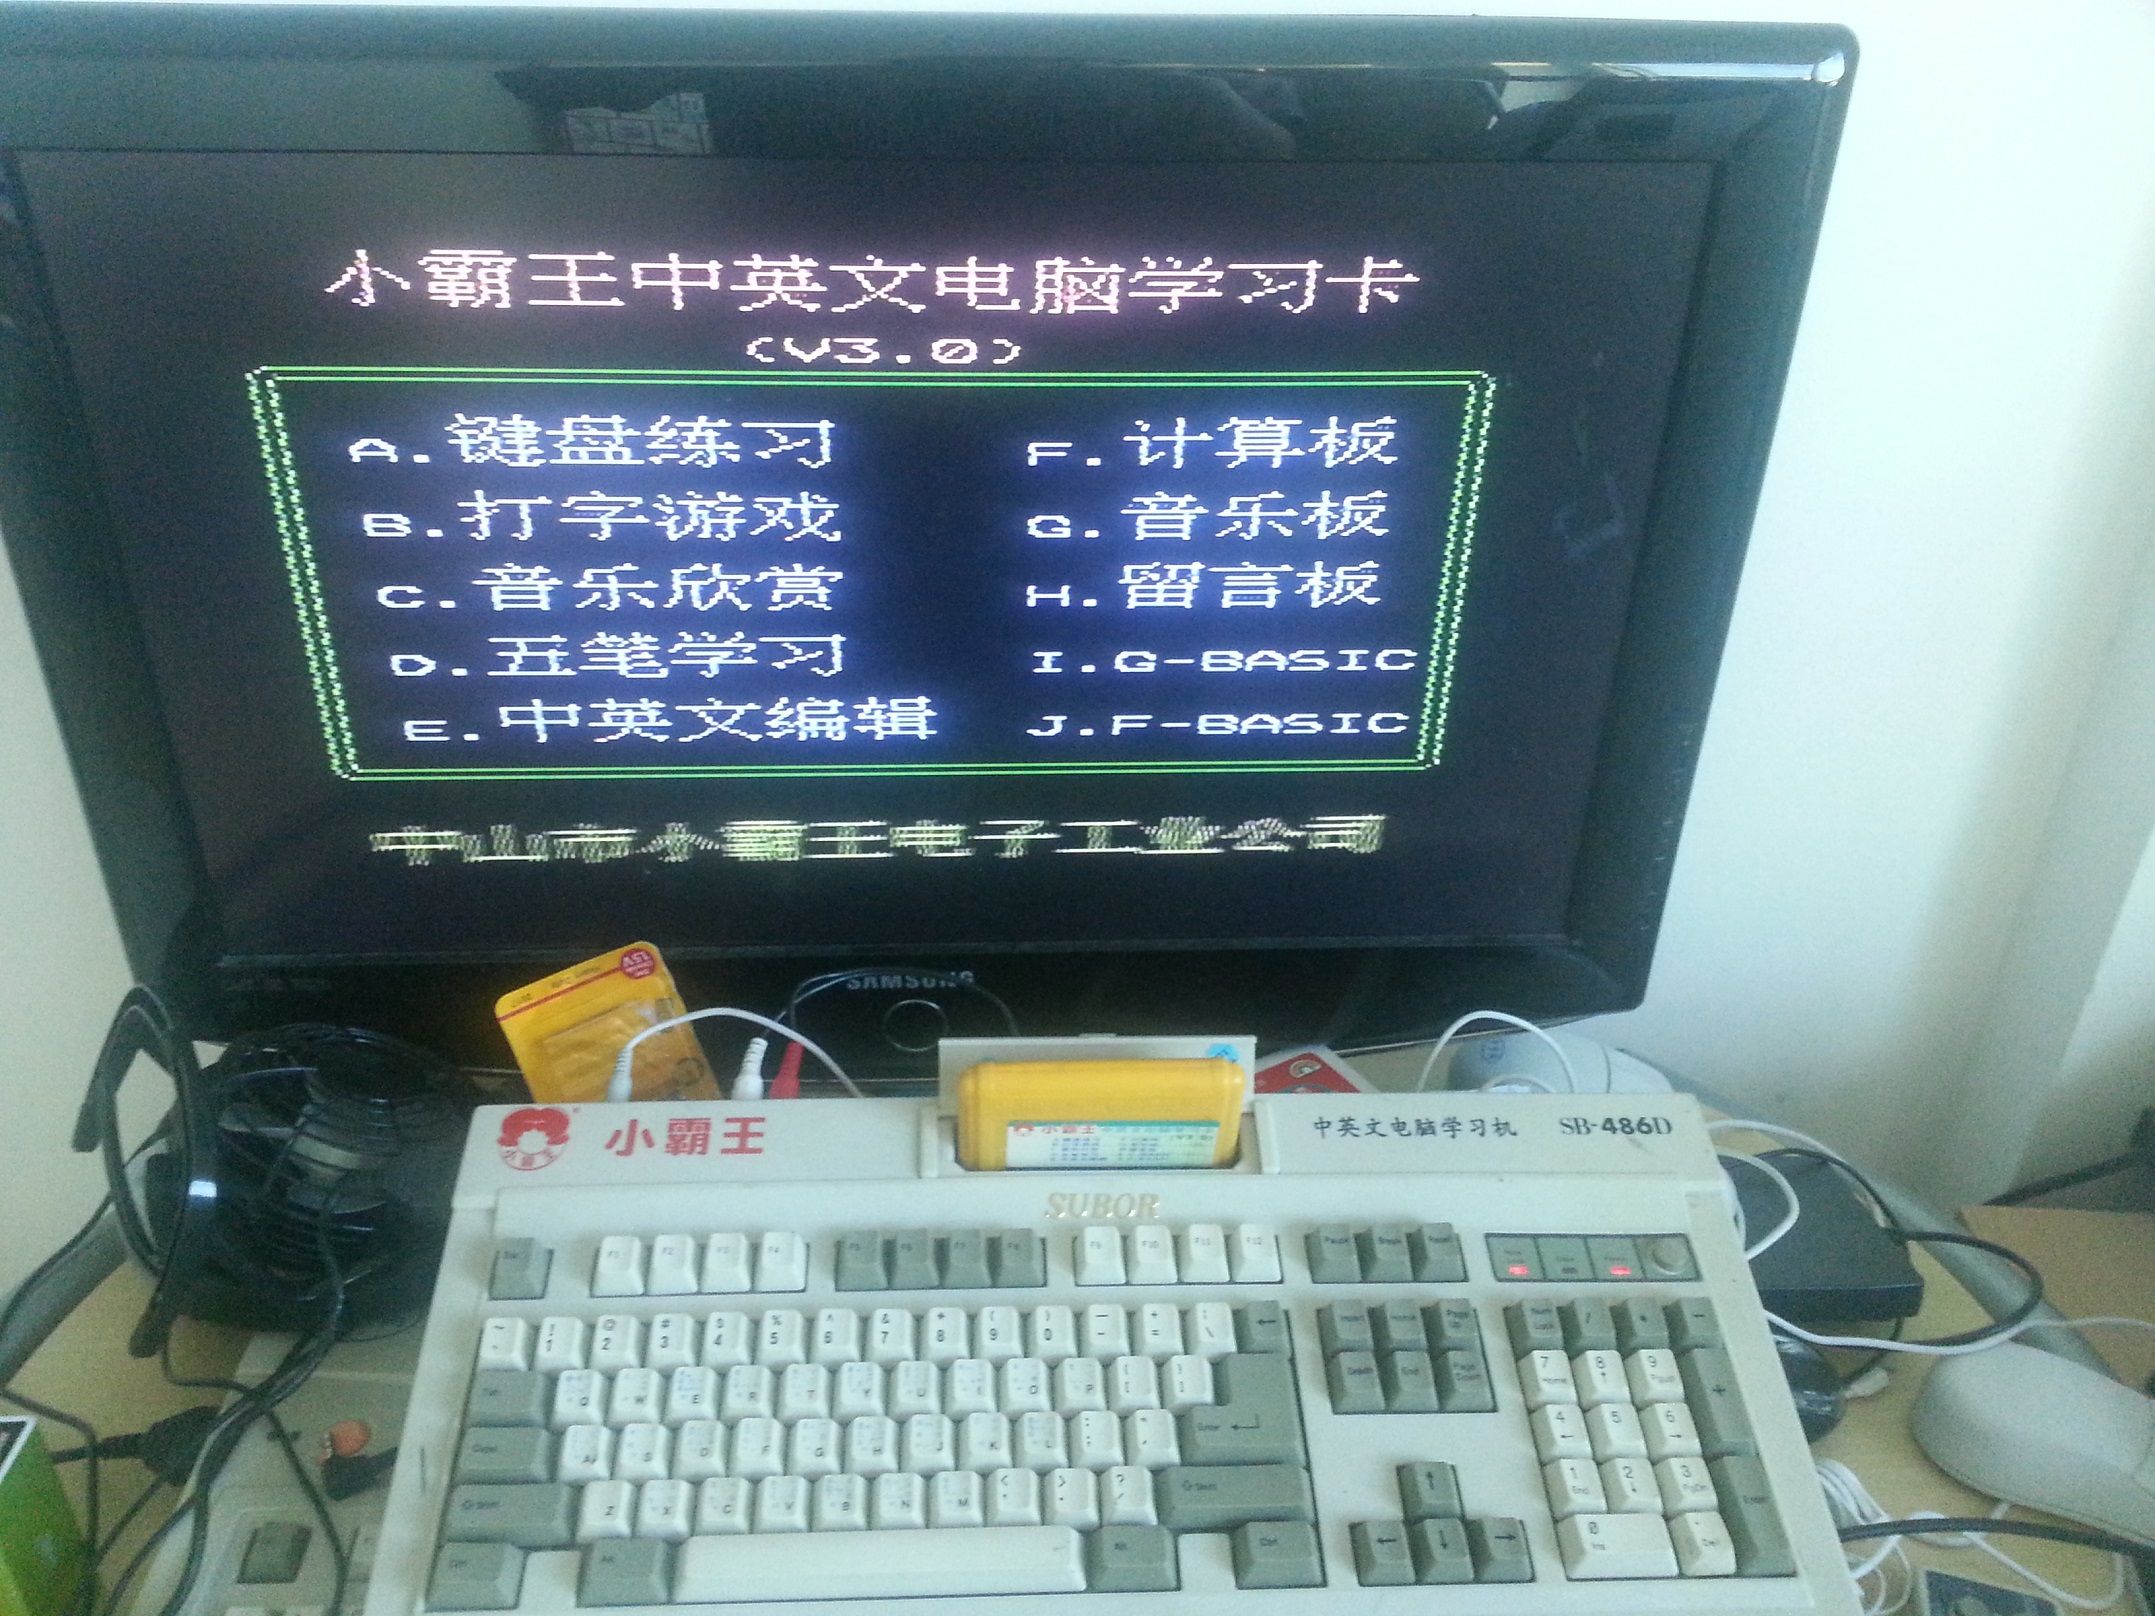 81840430b469d02a3c5d9db63a279175 The Childhood Memory - Subor Famicom Clone SB-486D (Xiao Ba Wang) 8 bit Nintendo Entertainment System Subor 